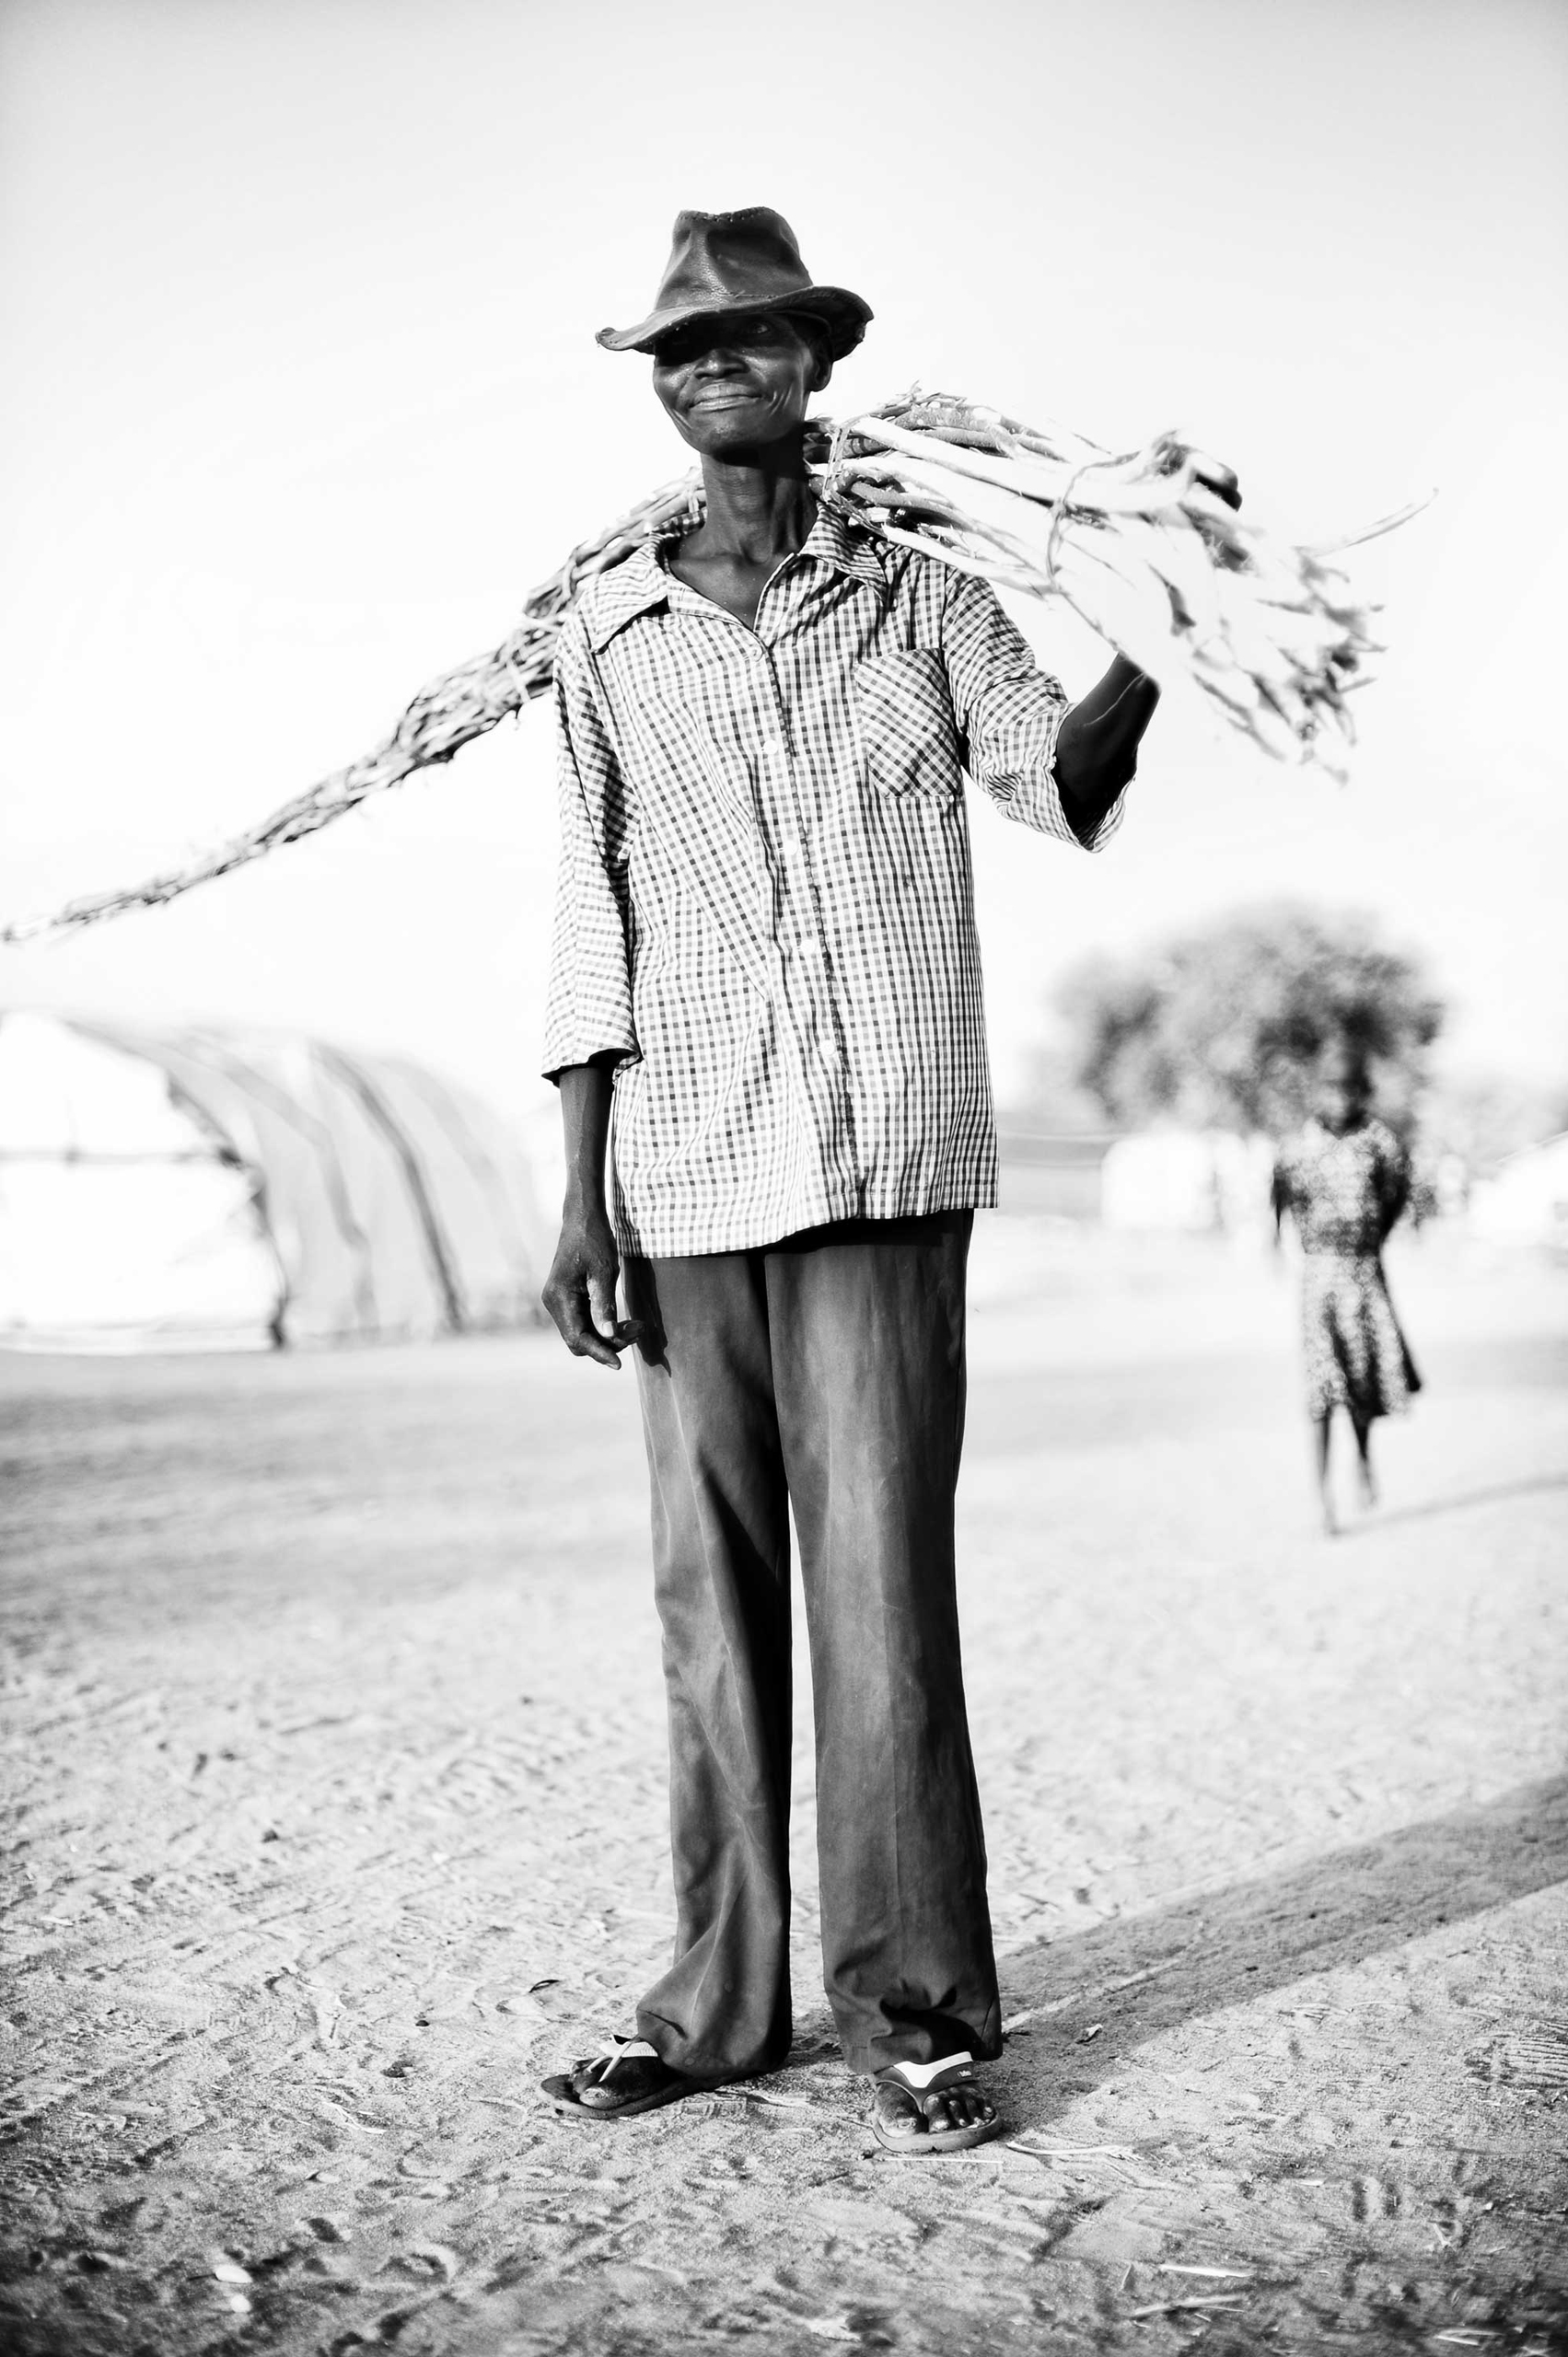 ugo-borga-south-soudan-portraits-2016-black-and-white-07